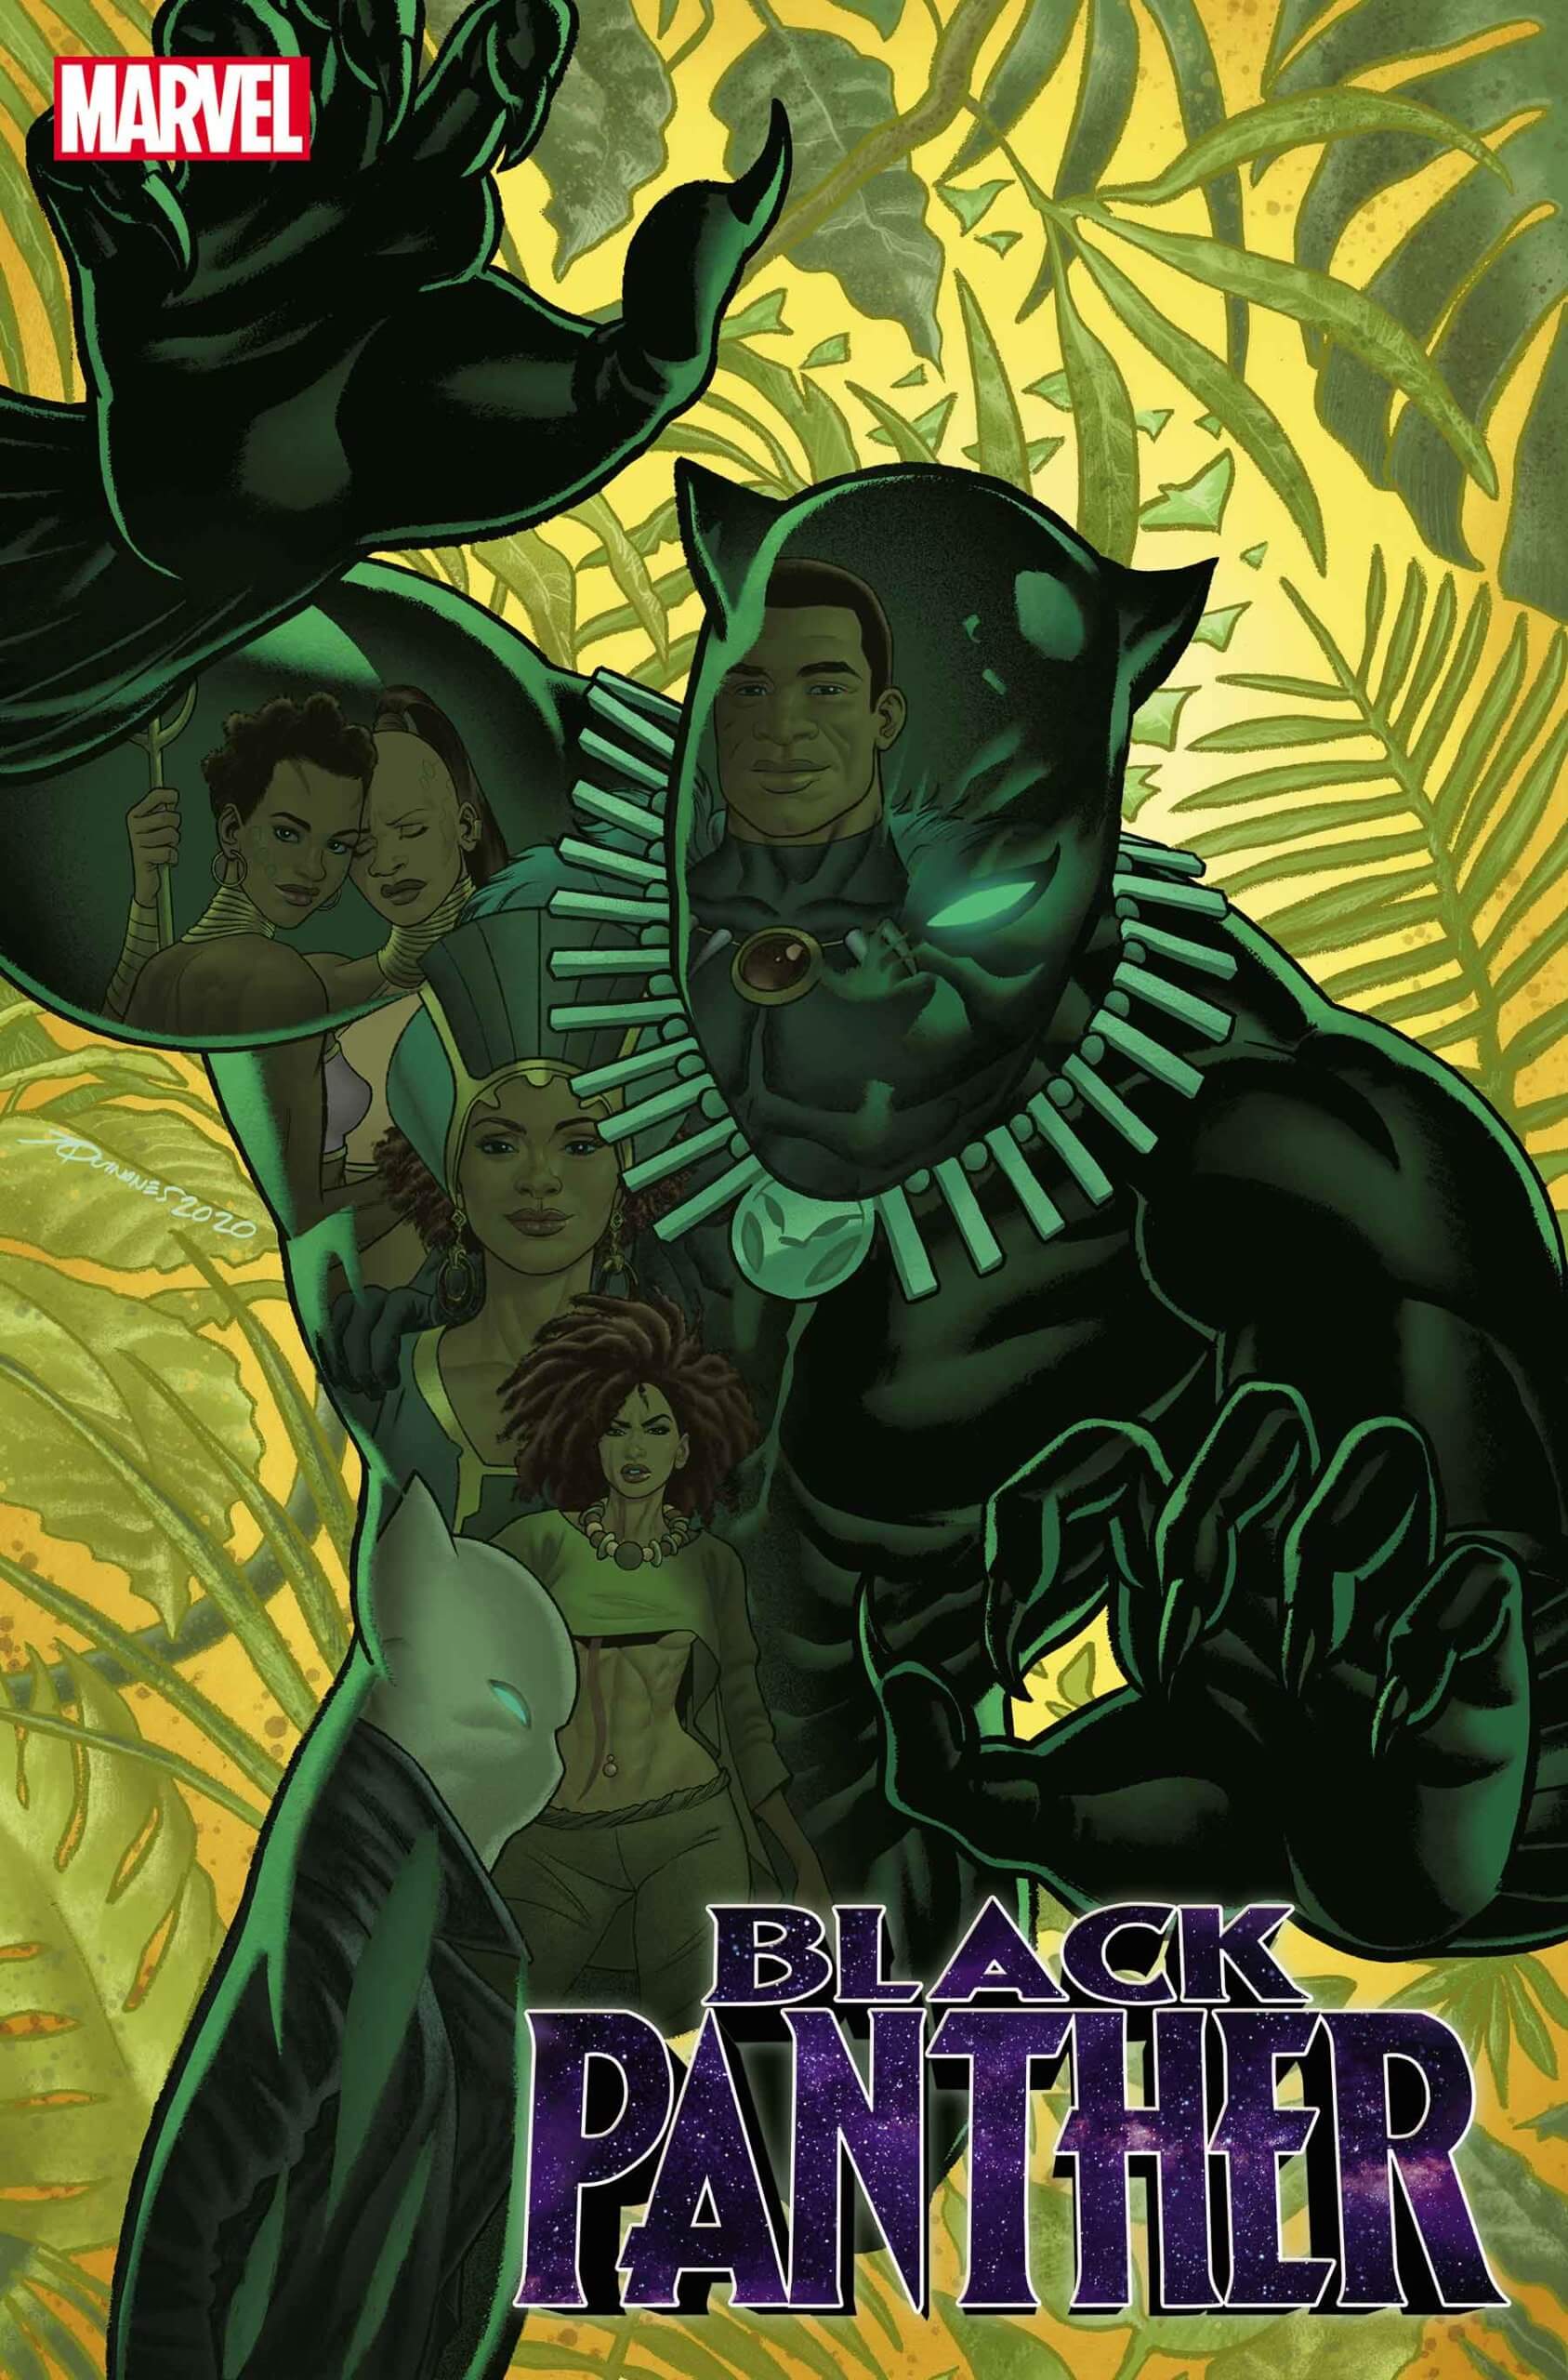 Марвел март. Black Panther Marvel Art. Абраксас Марвел арт. Black Cat #4 women’s History month variant Cover by Jen Bartel.